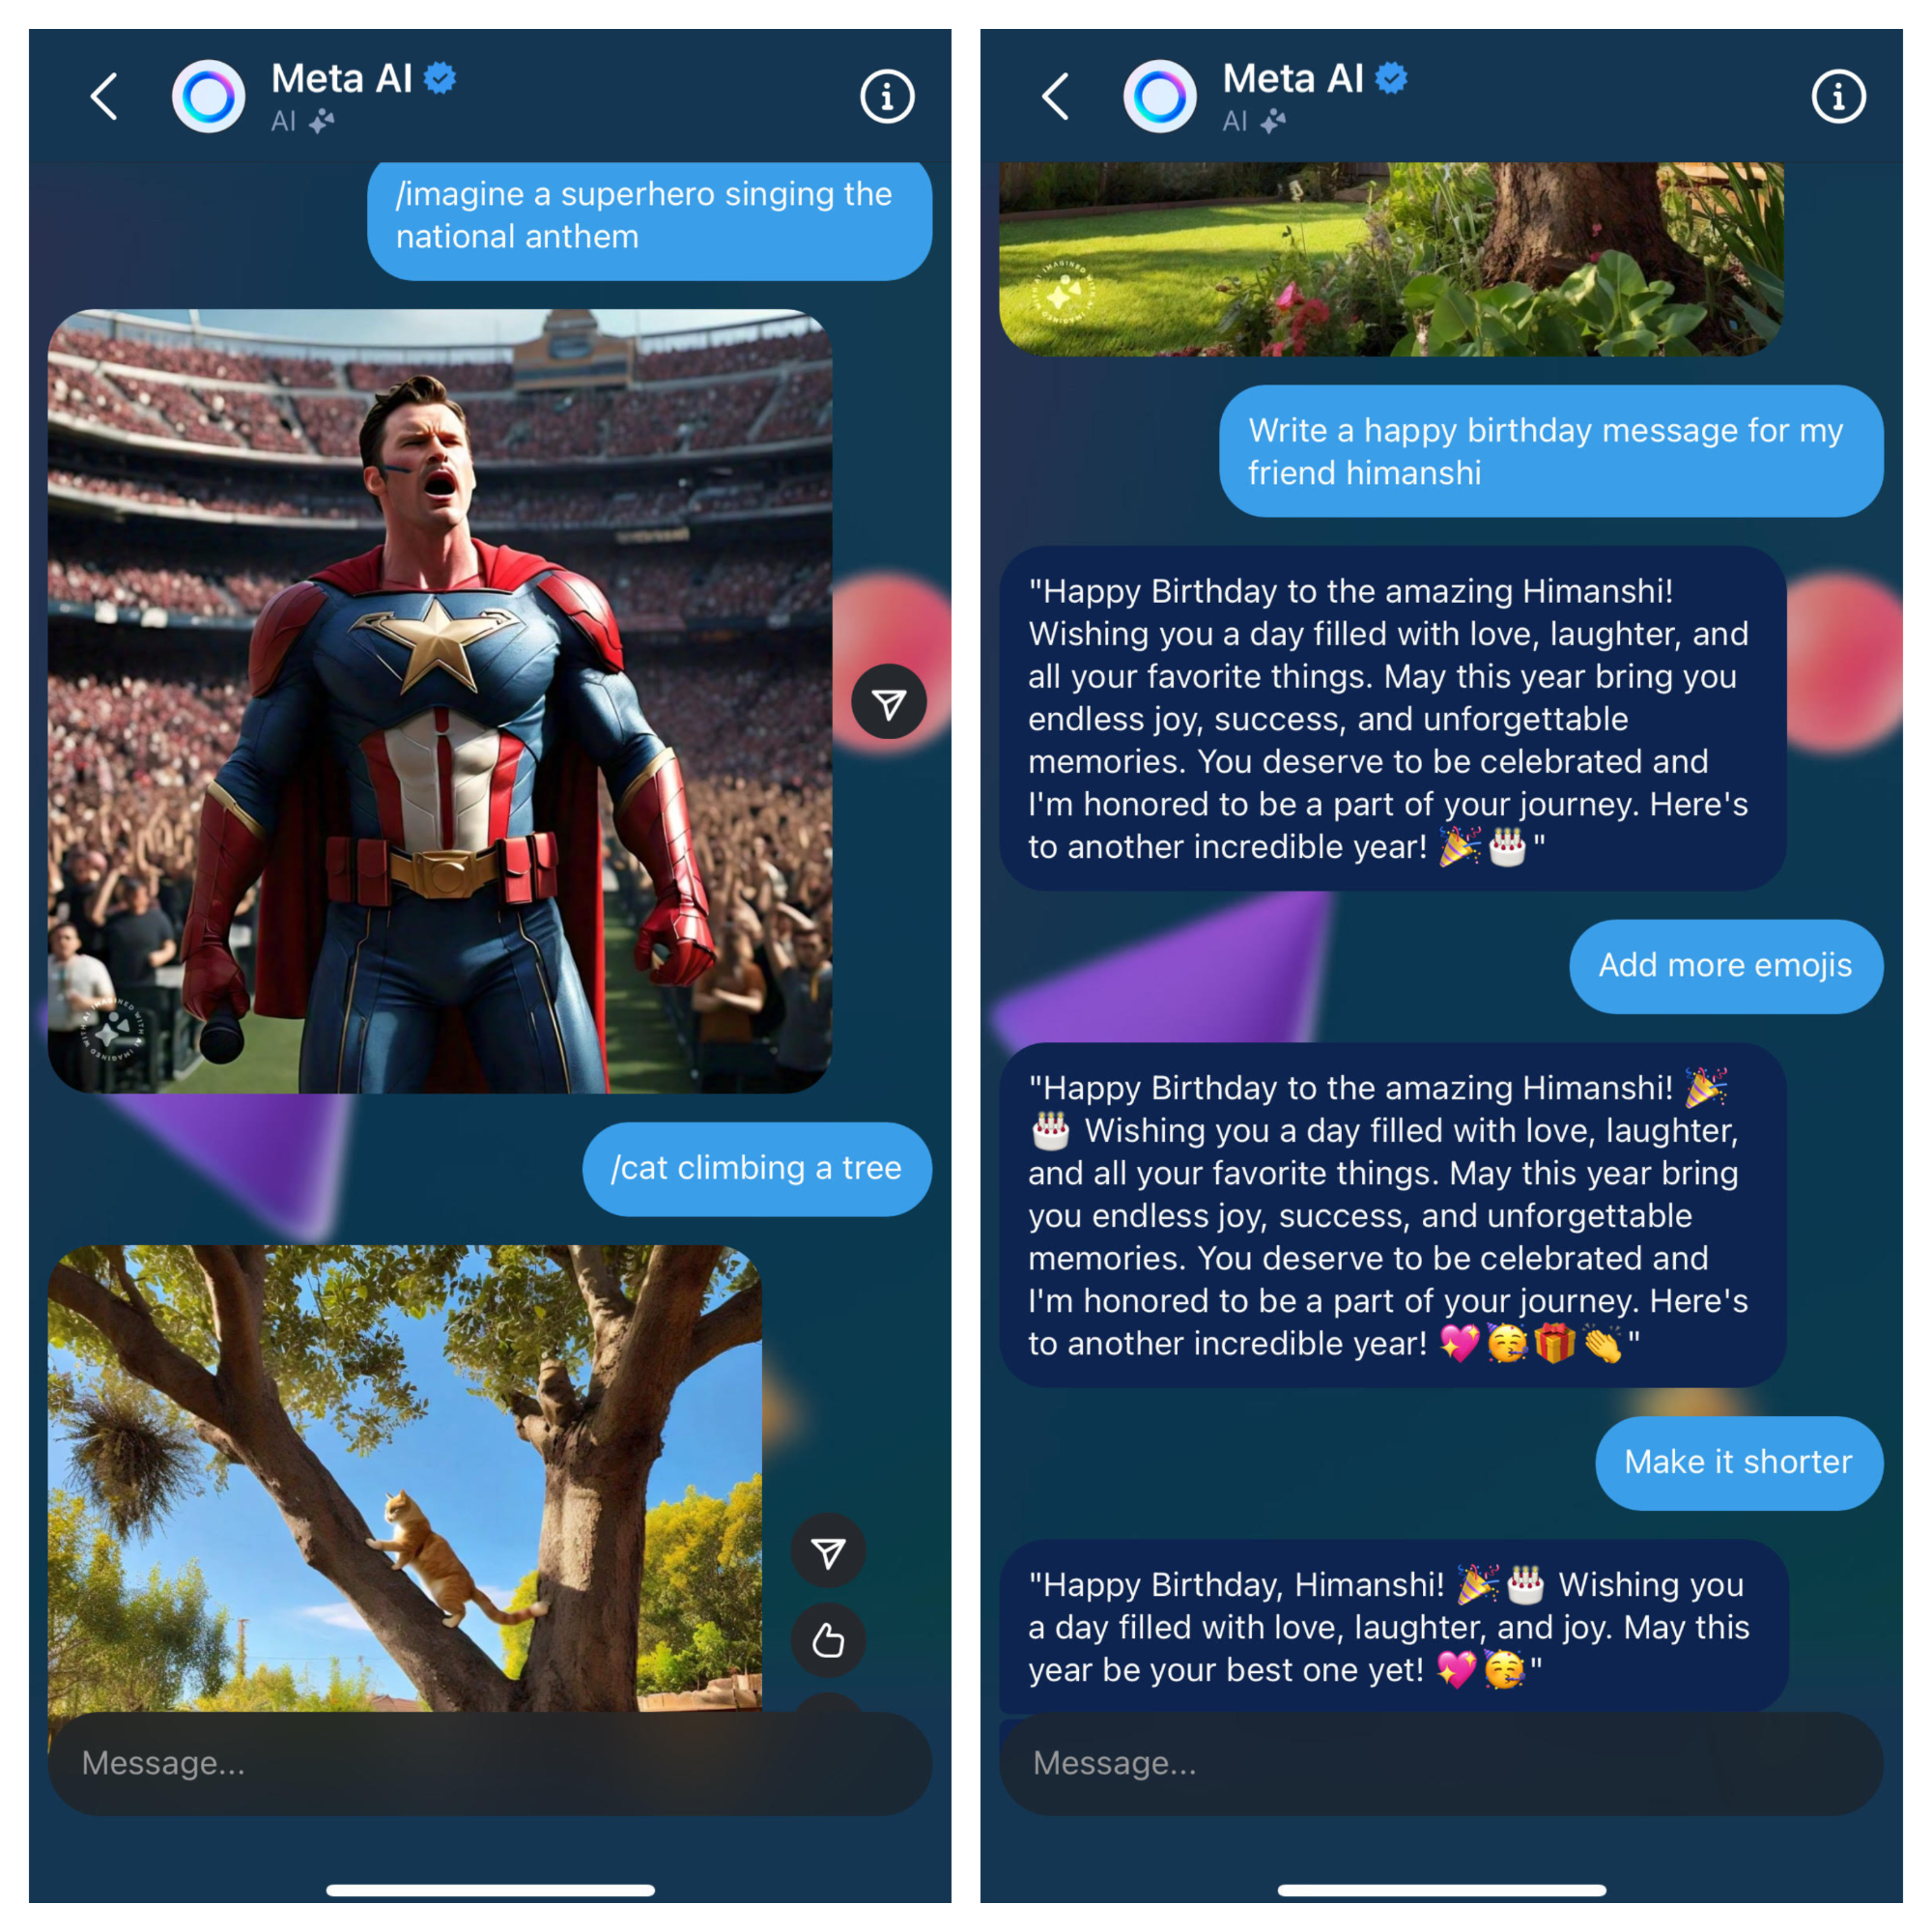 Meta AI on Instagram and Messenger